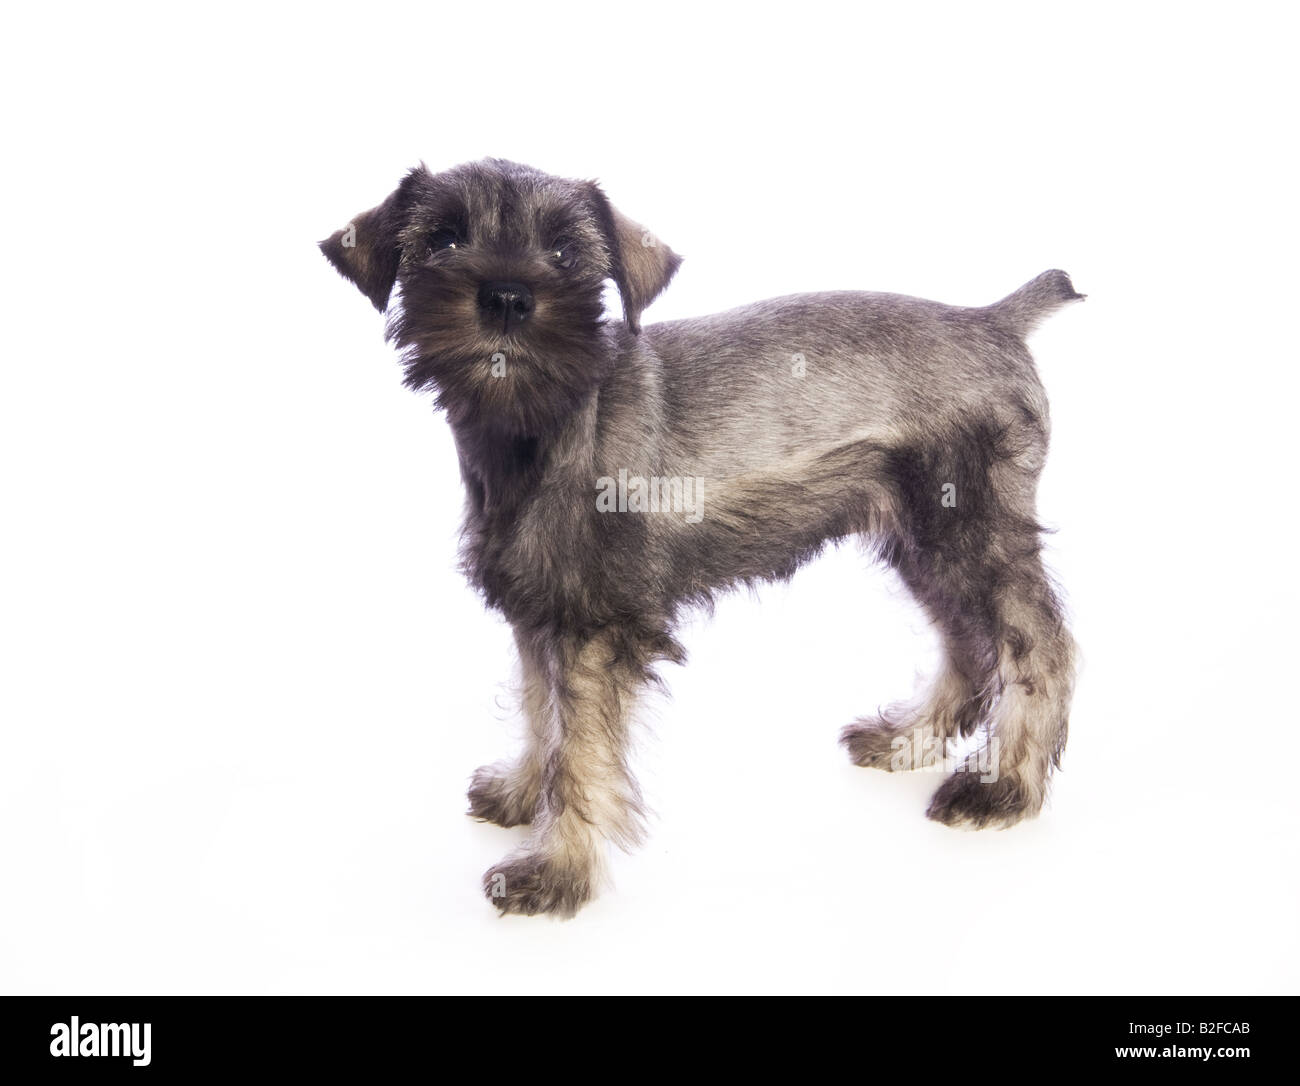 Adorable Miniature Schnauzer puppy isolated on white background Stock Photo